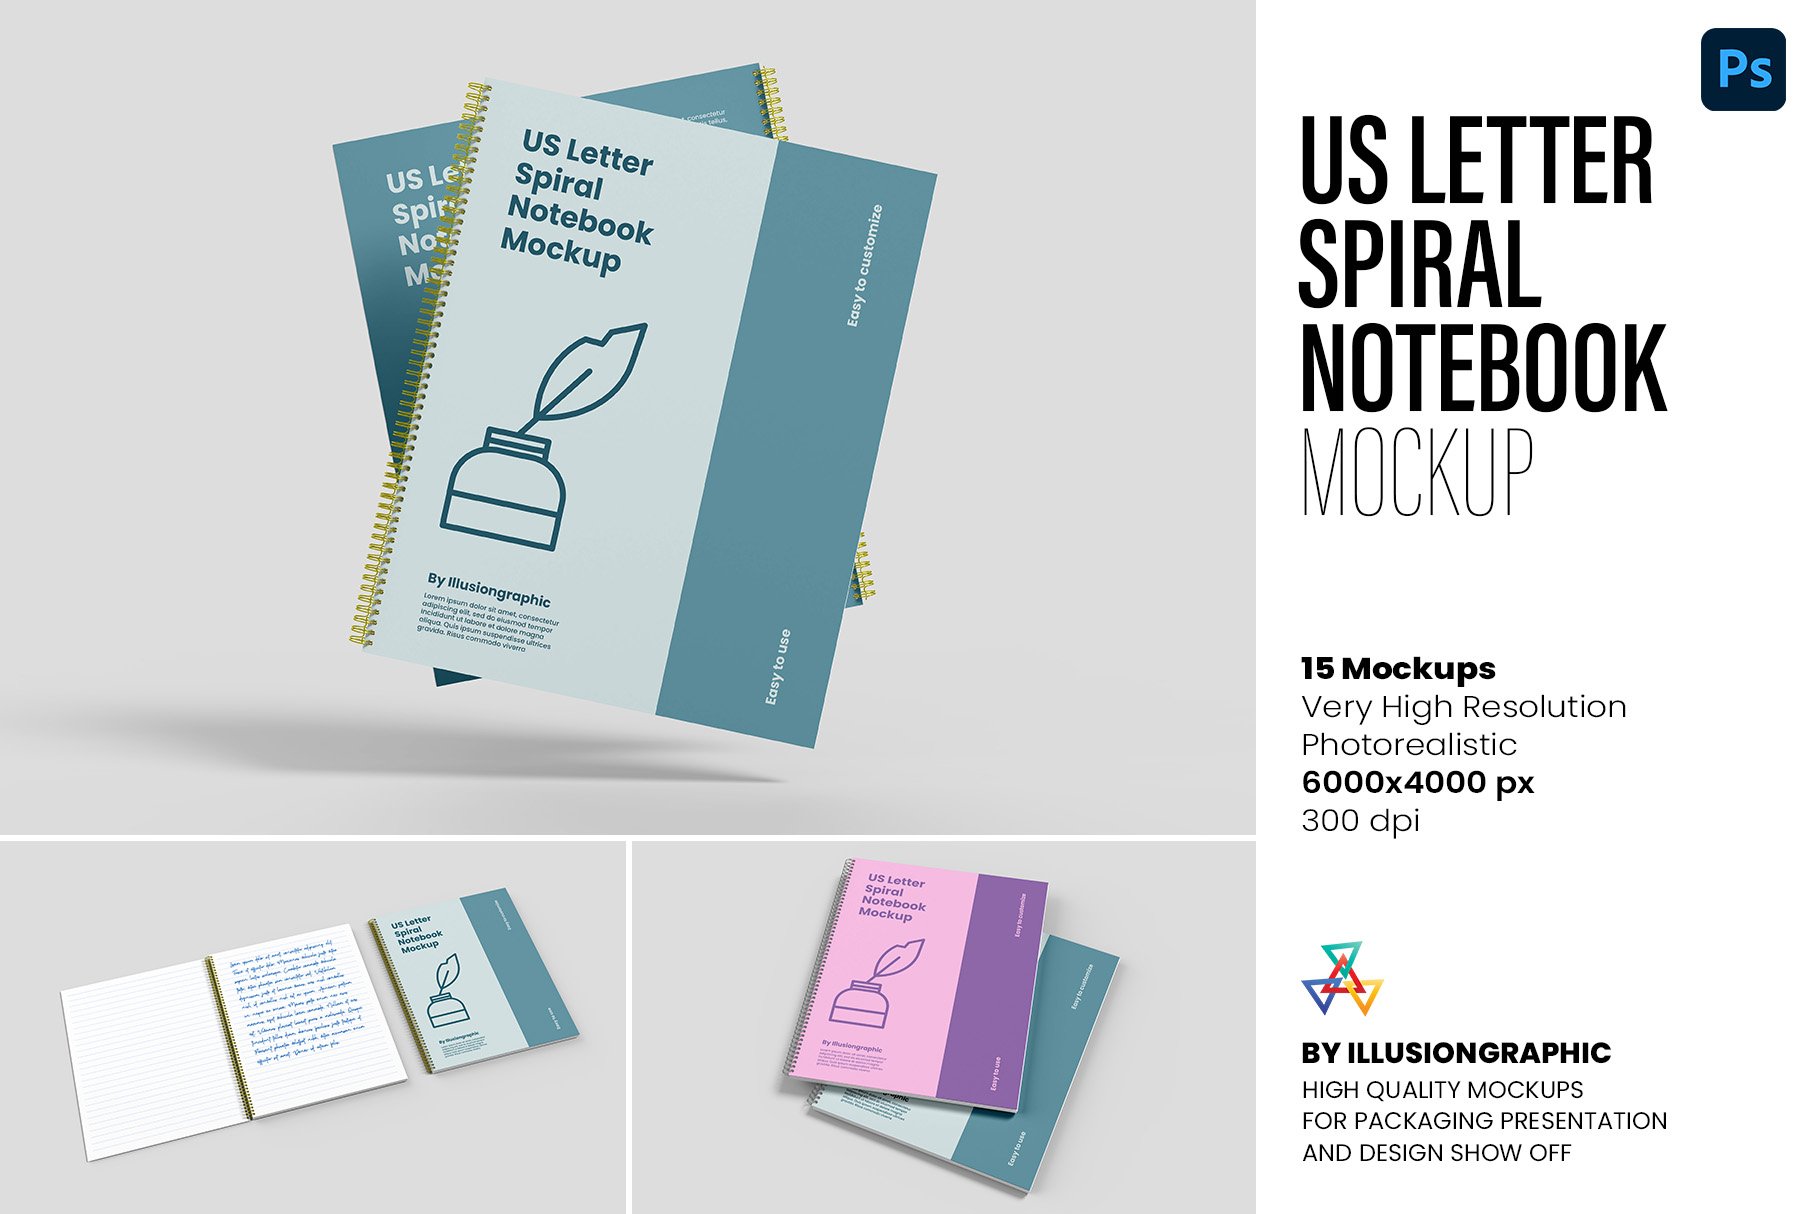 Spiral Notebook Mockup - A4 - 8 Views - Design Cuts